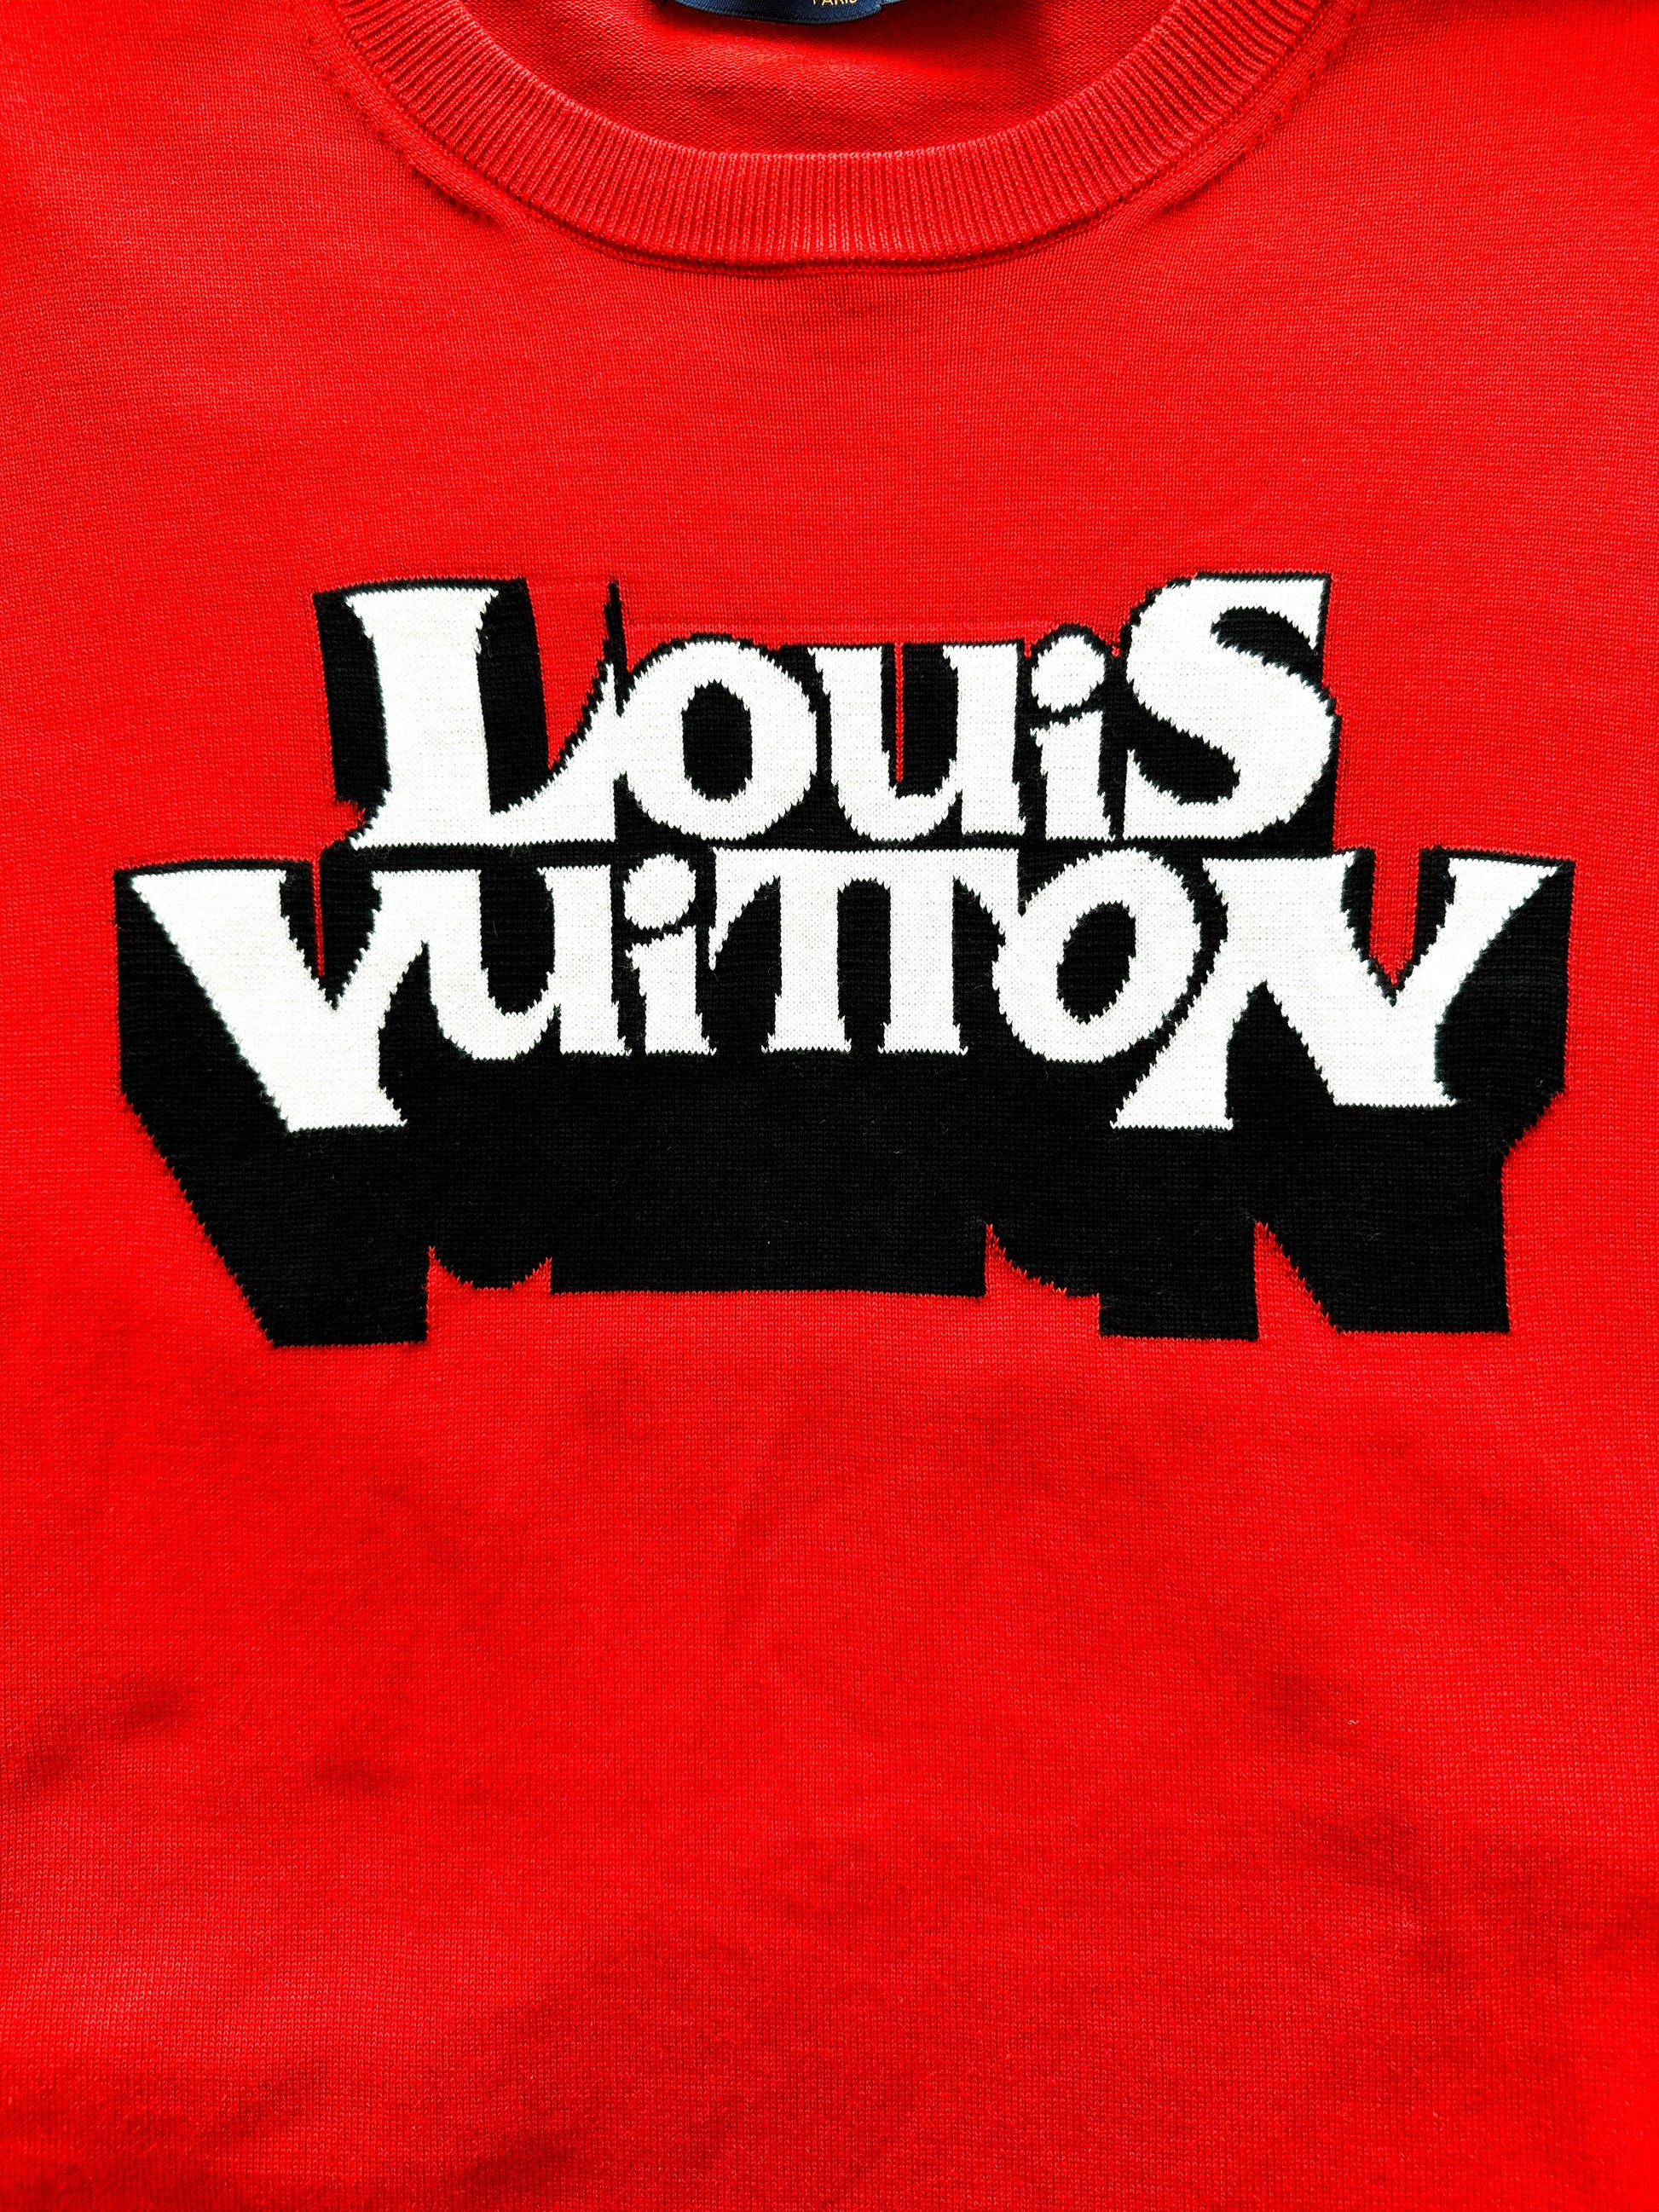 Louis Vuitton LV Red Logo Shirt - Vintagenclassic Tee